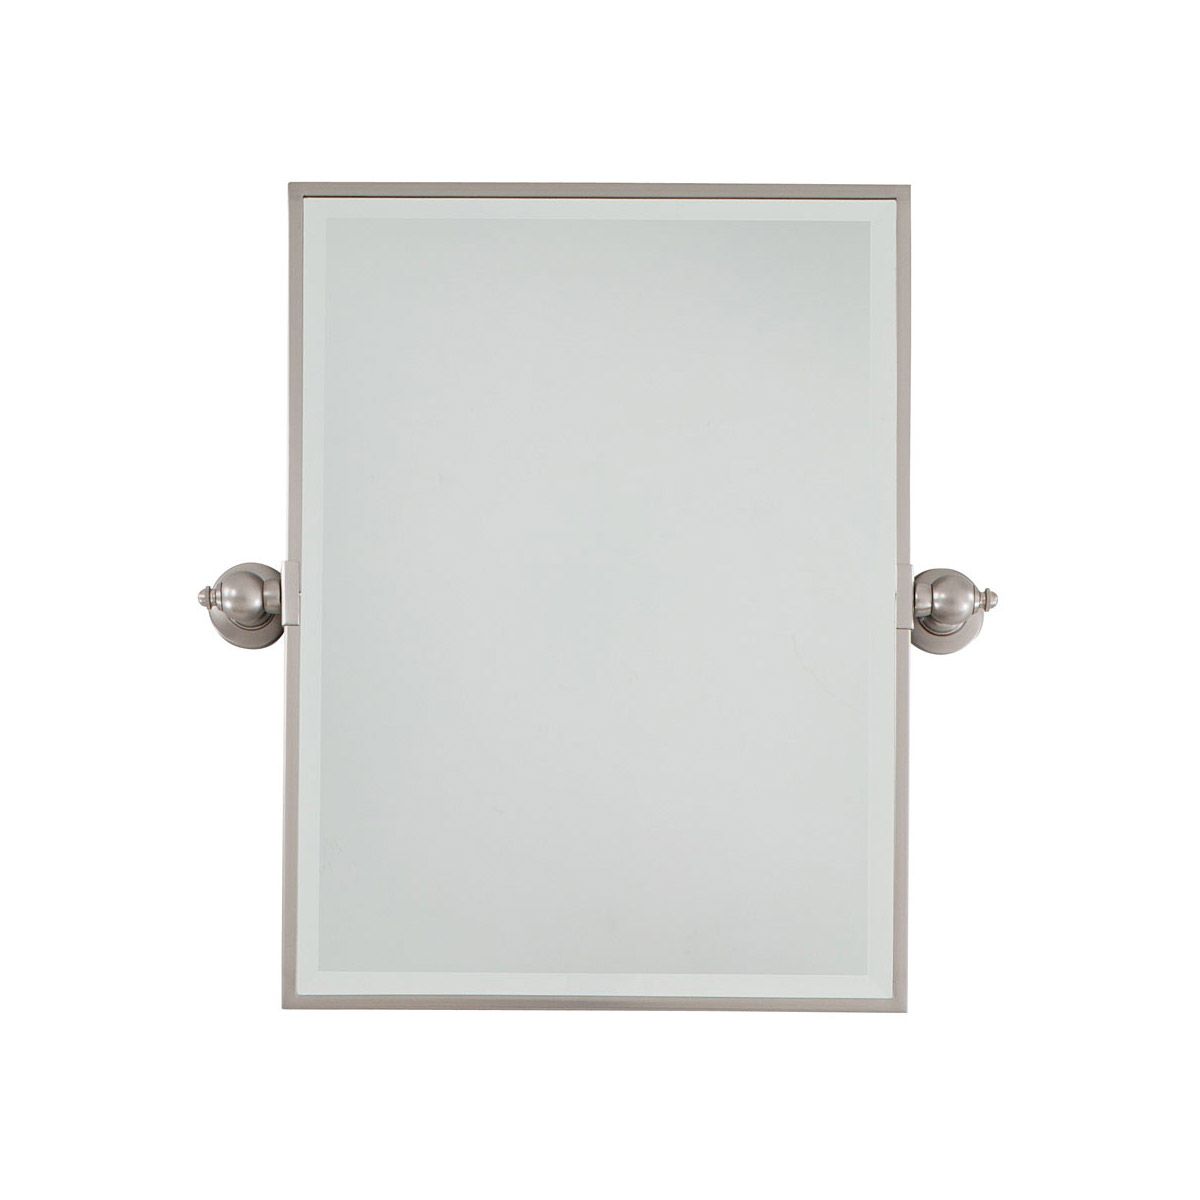 Minka Lavery 1440 84 Pivot Mirrors Wall Mirror Brushed Nickel | Ebay In Polished Nickel Rectangular Wall Mirrors (View 15 of 15)